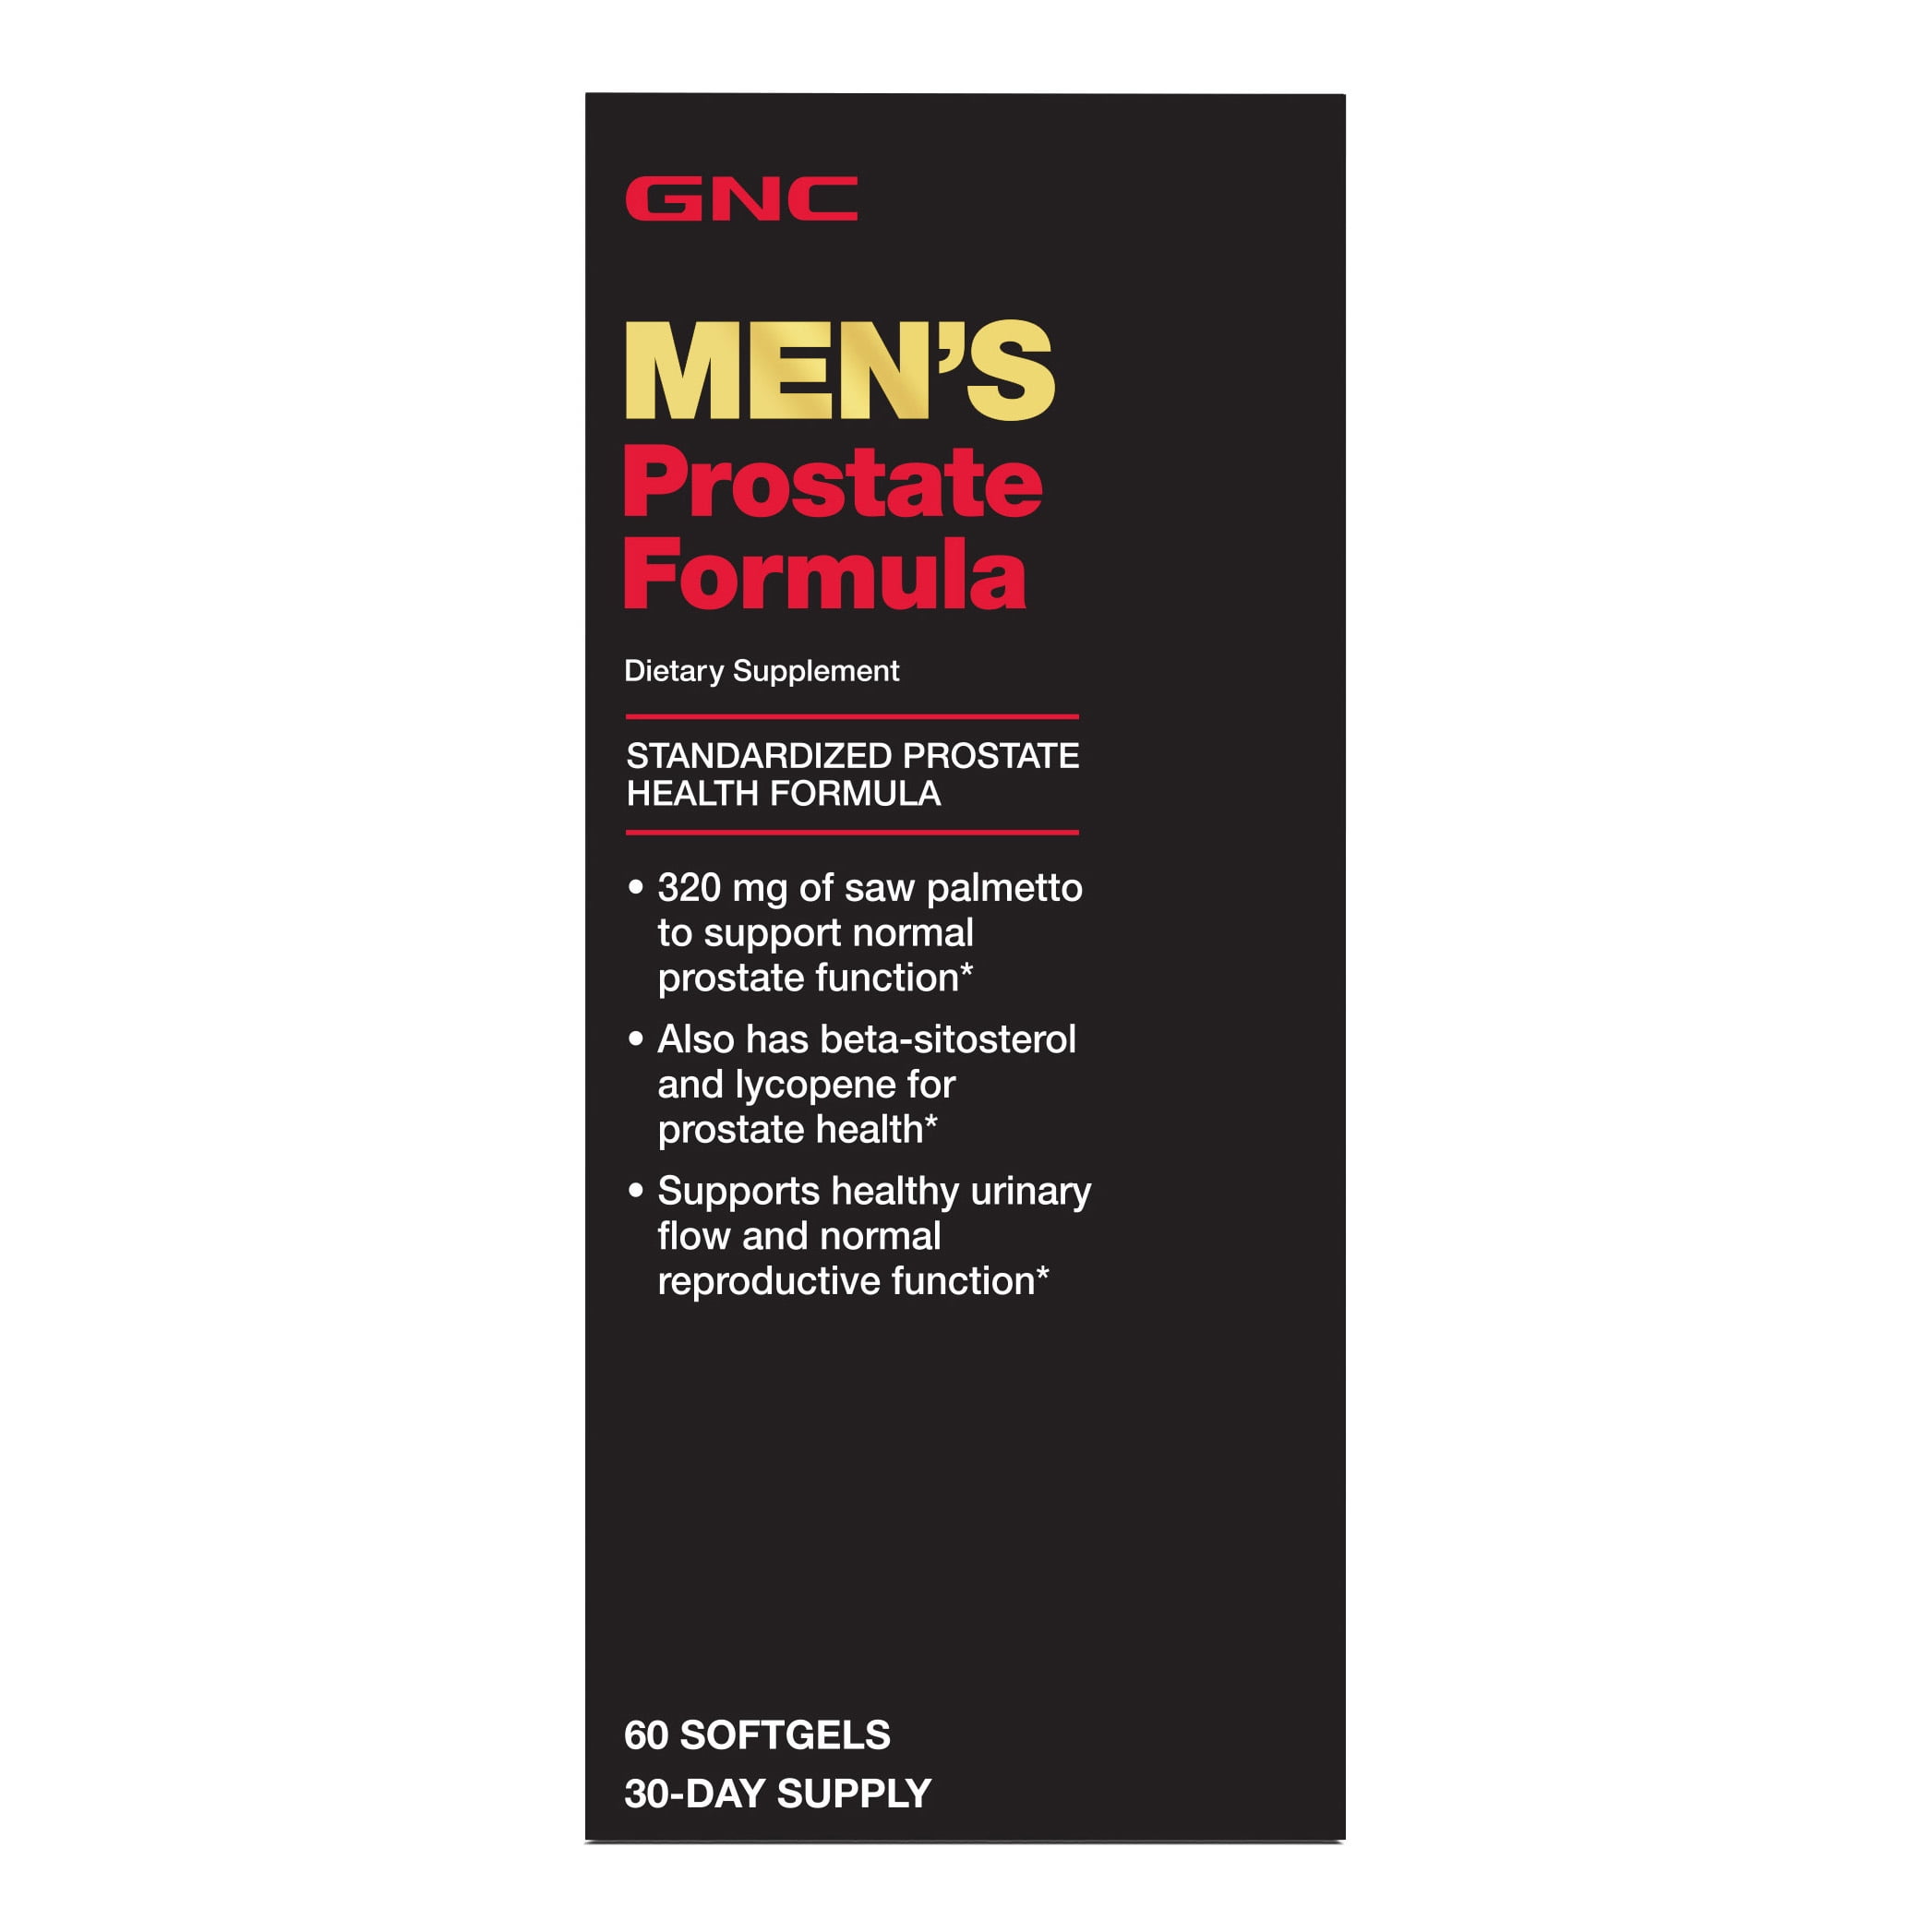 prostate formula gnc)